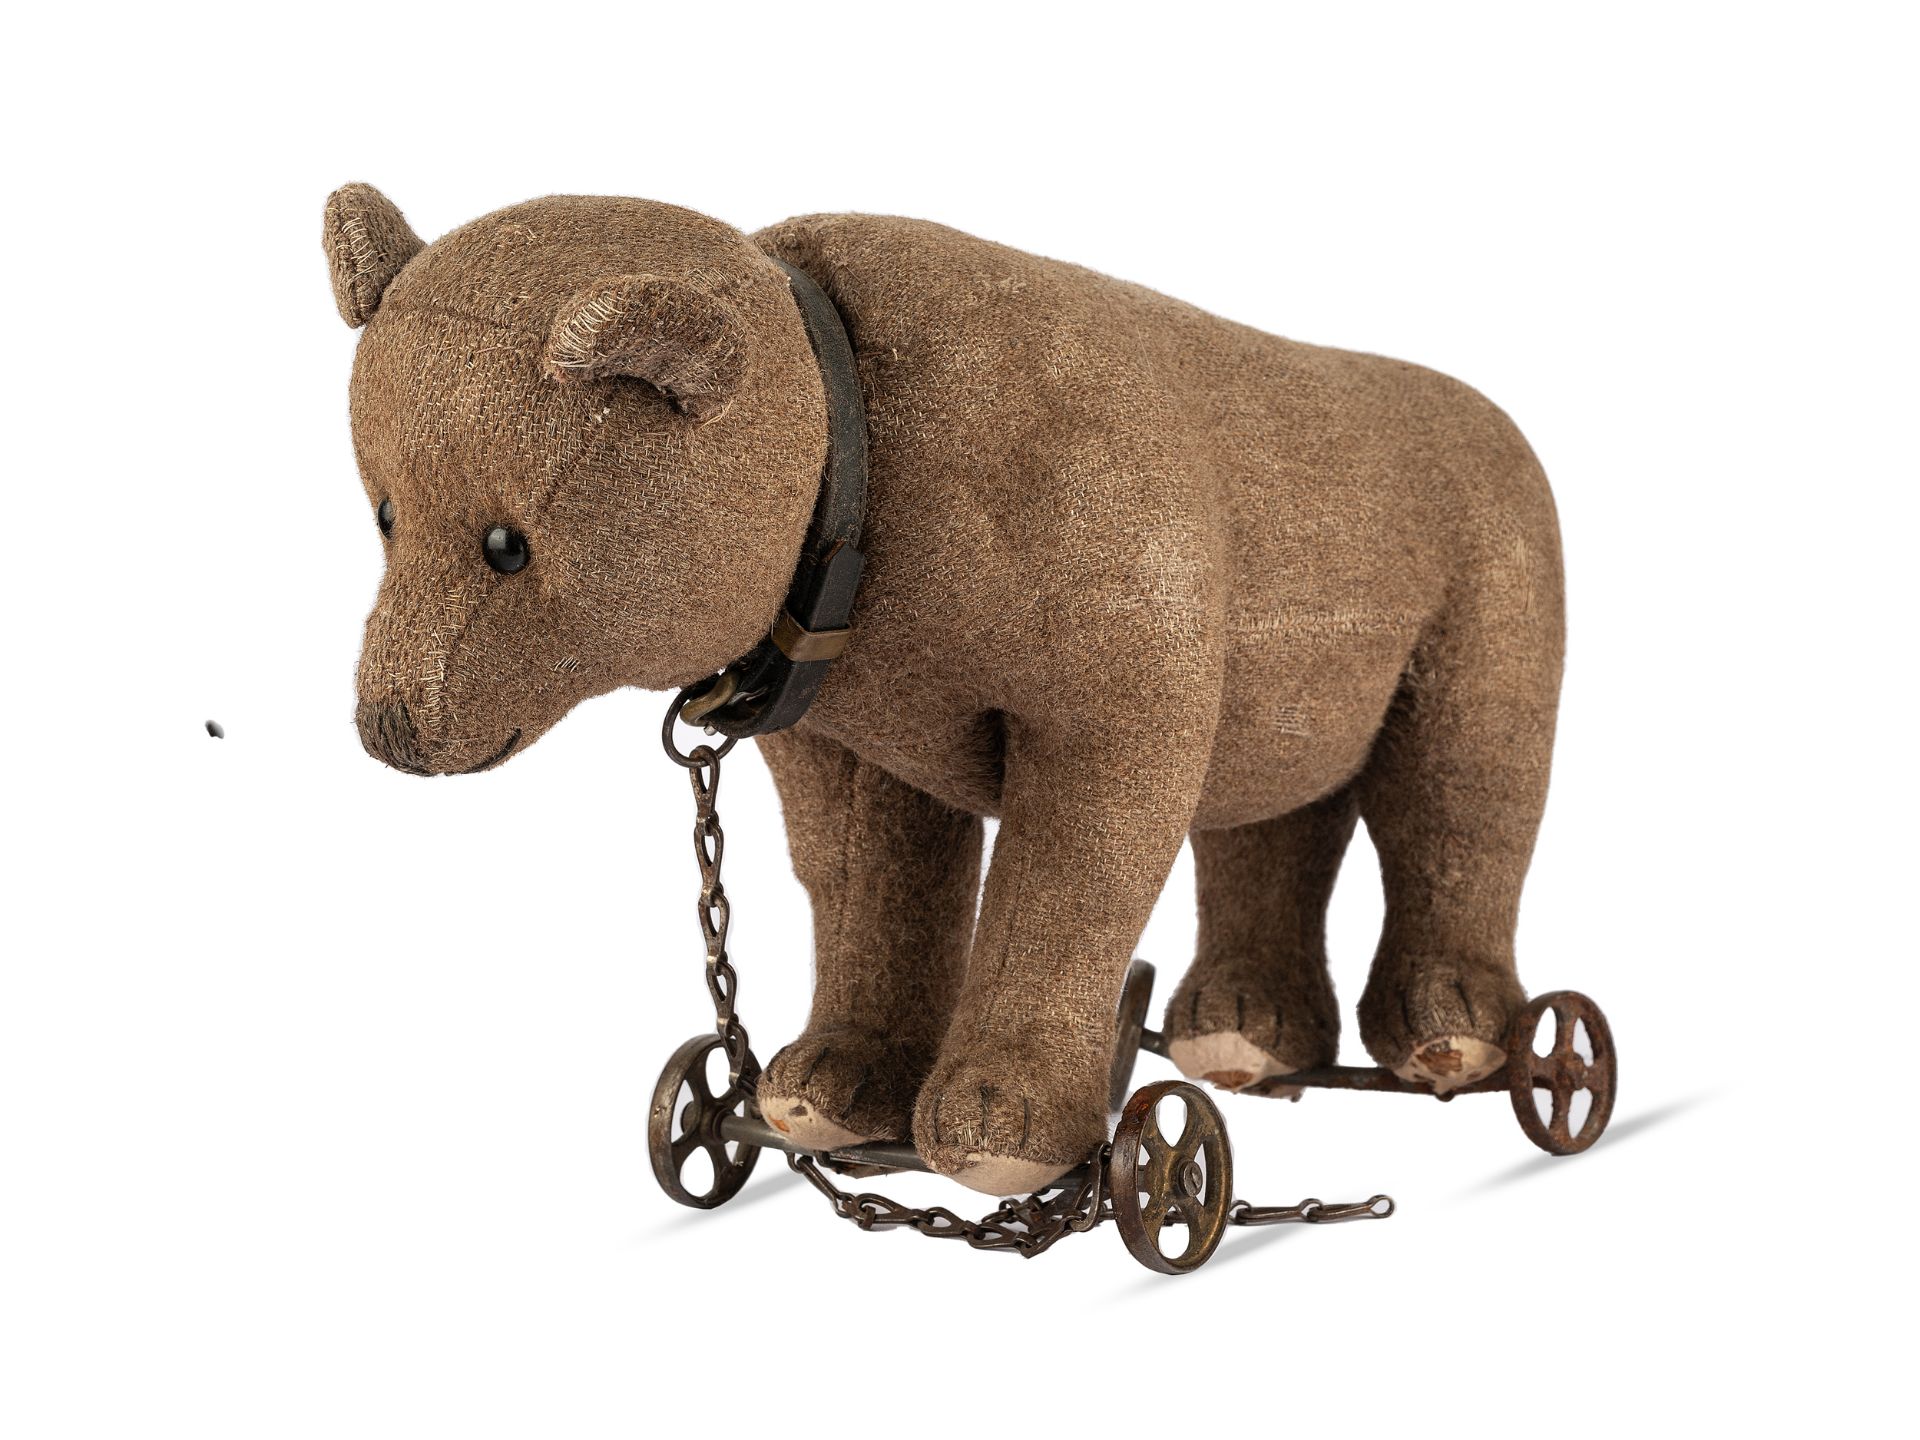 Toy bear on wheels, Around 1910, Fabric & cast iron castors